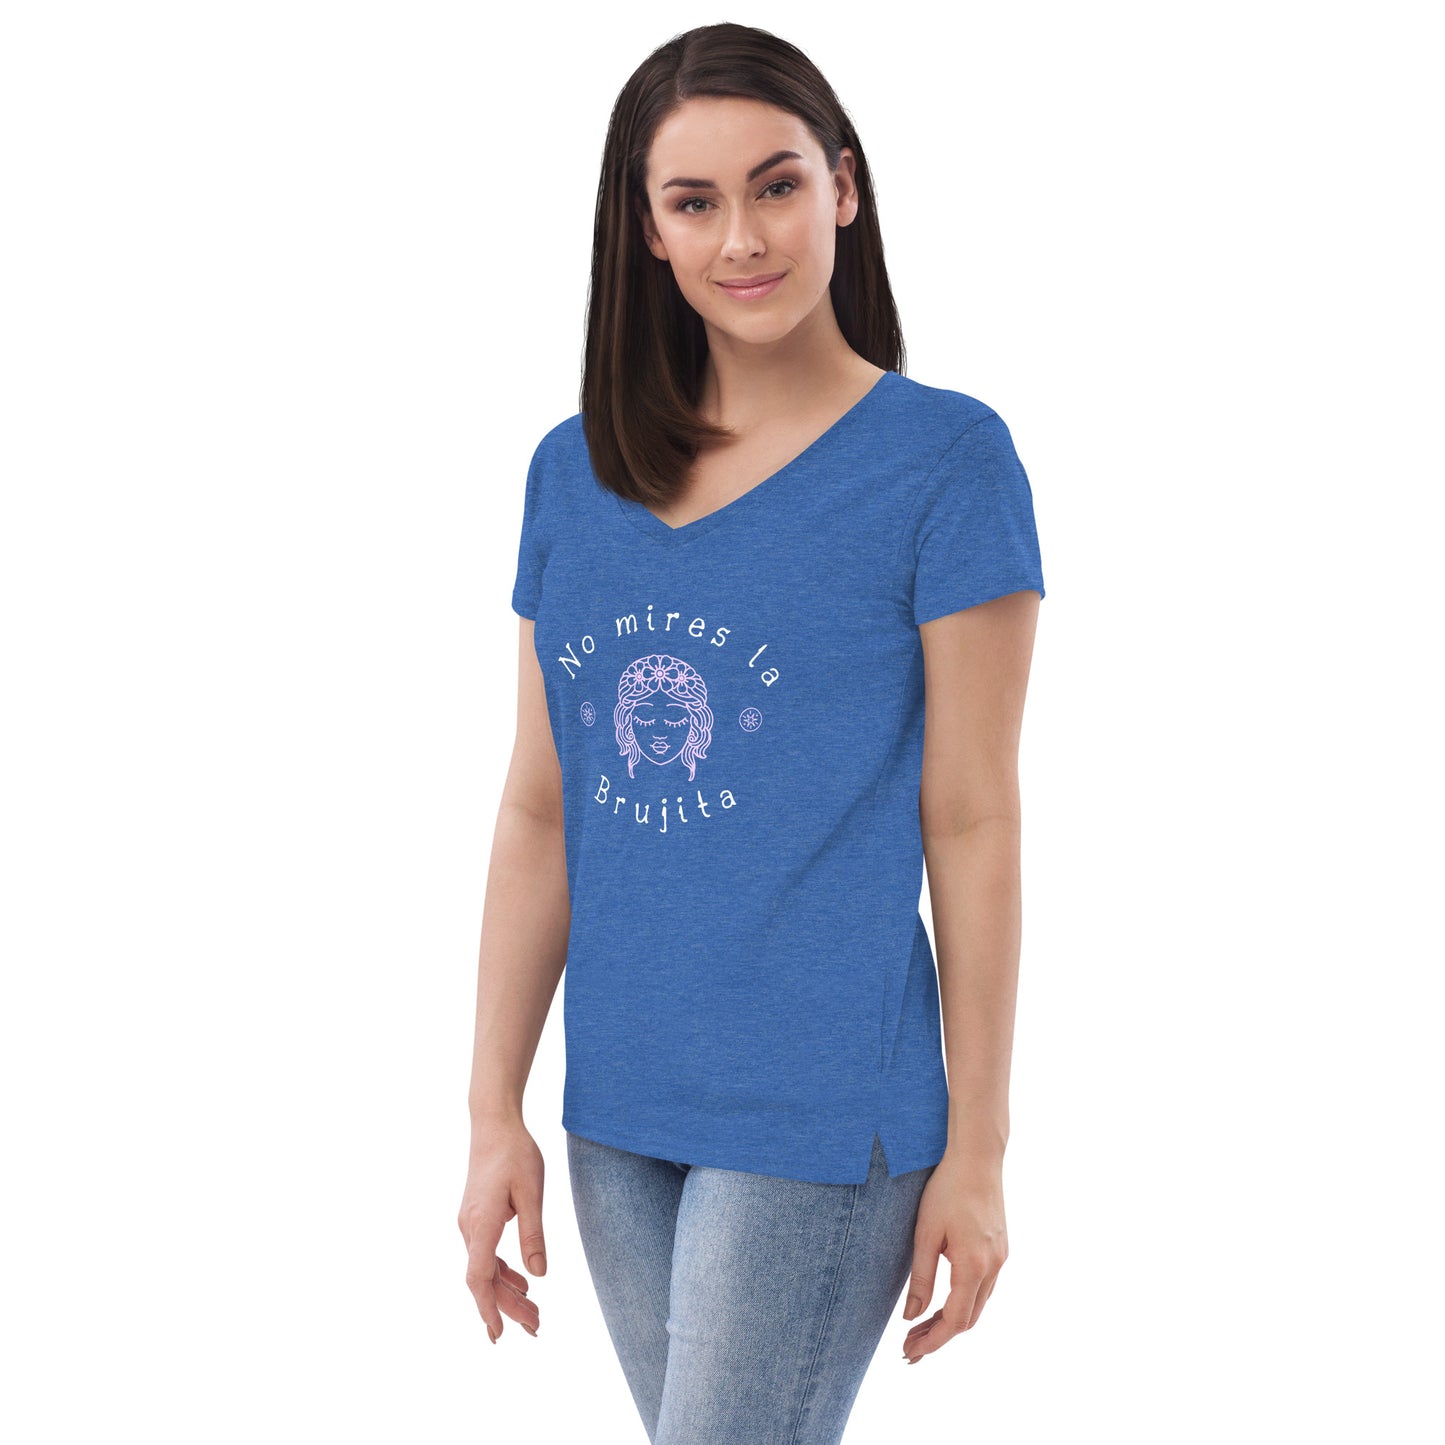 La Brujita Women’s recycled v-neck t-shirt